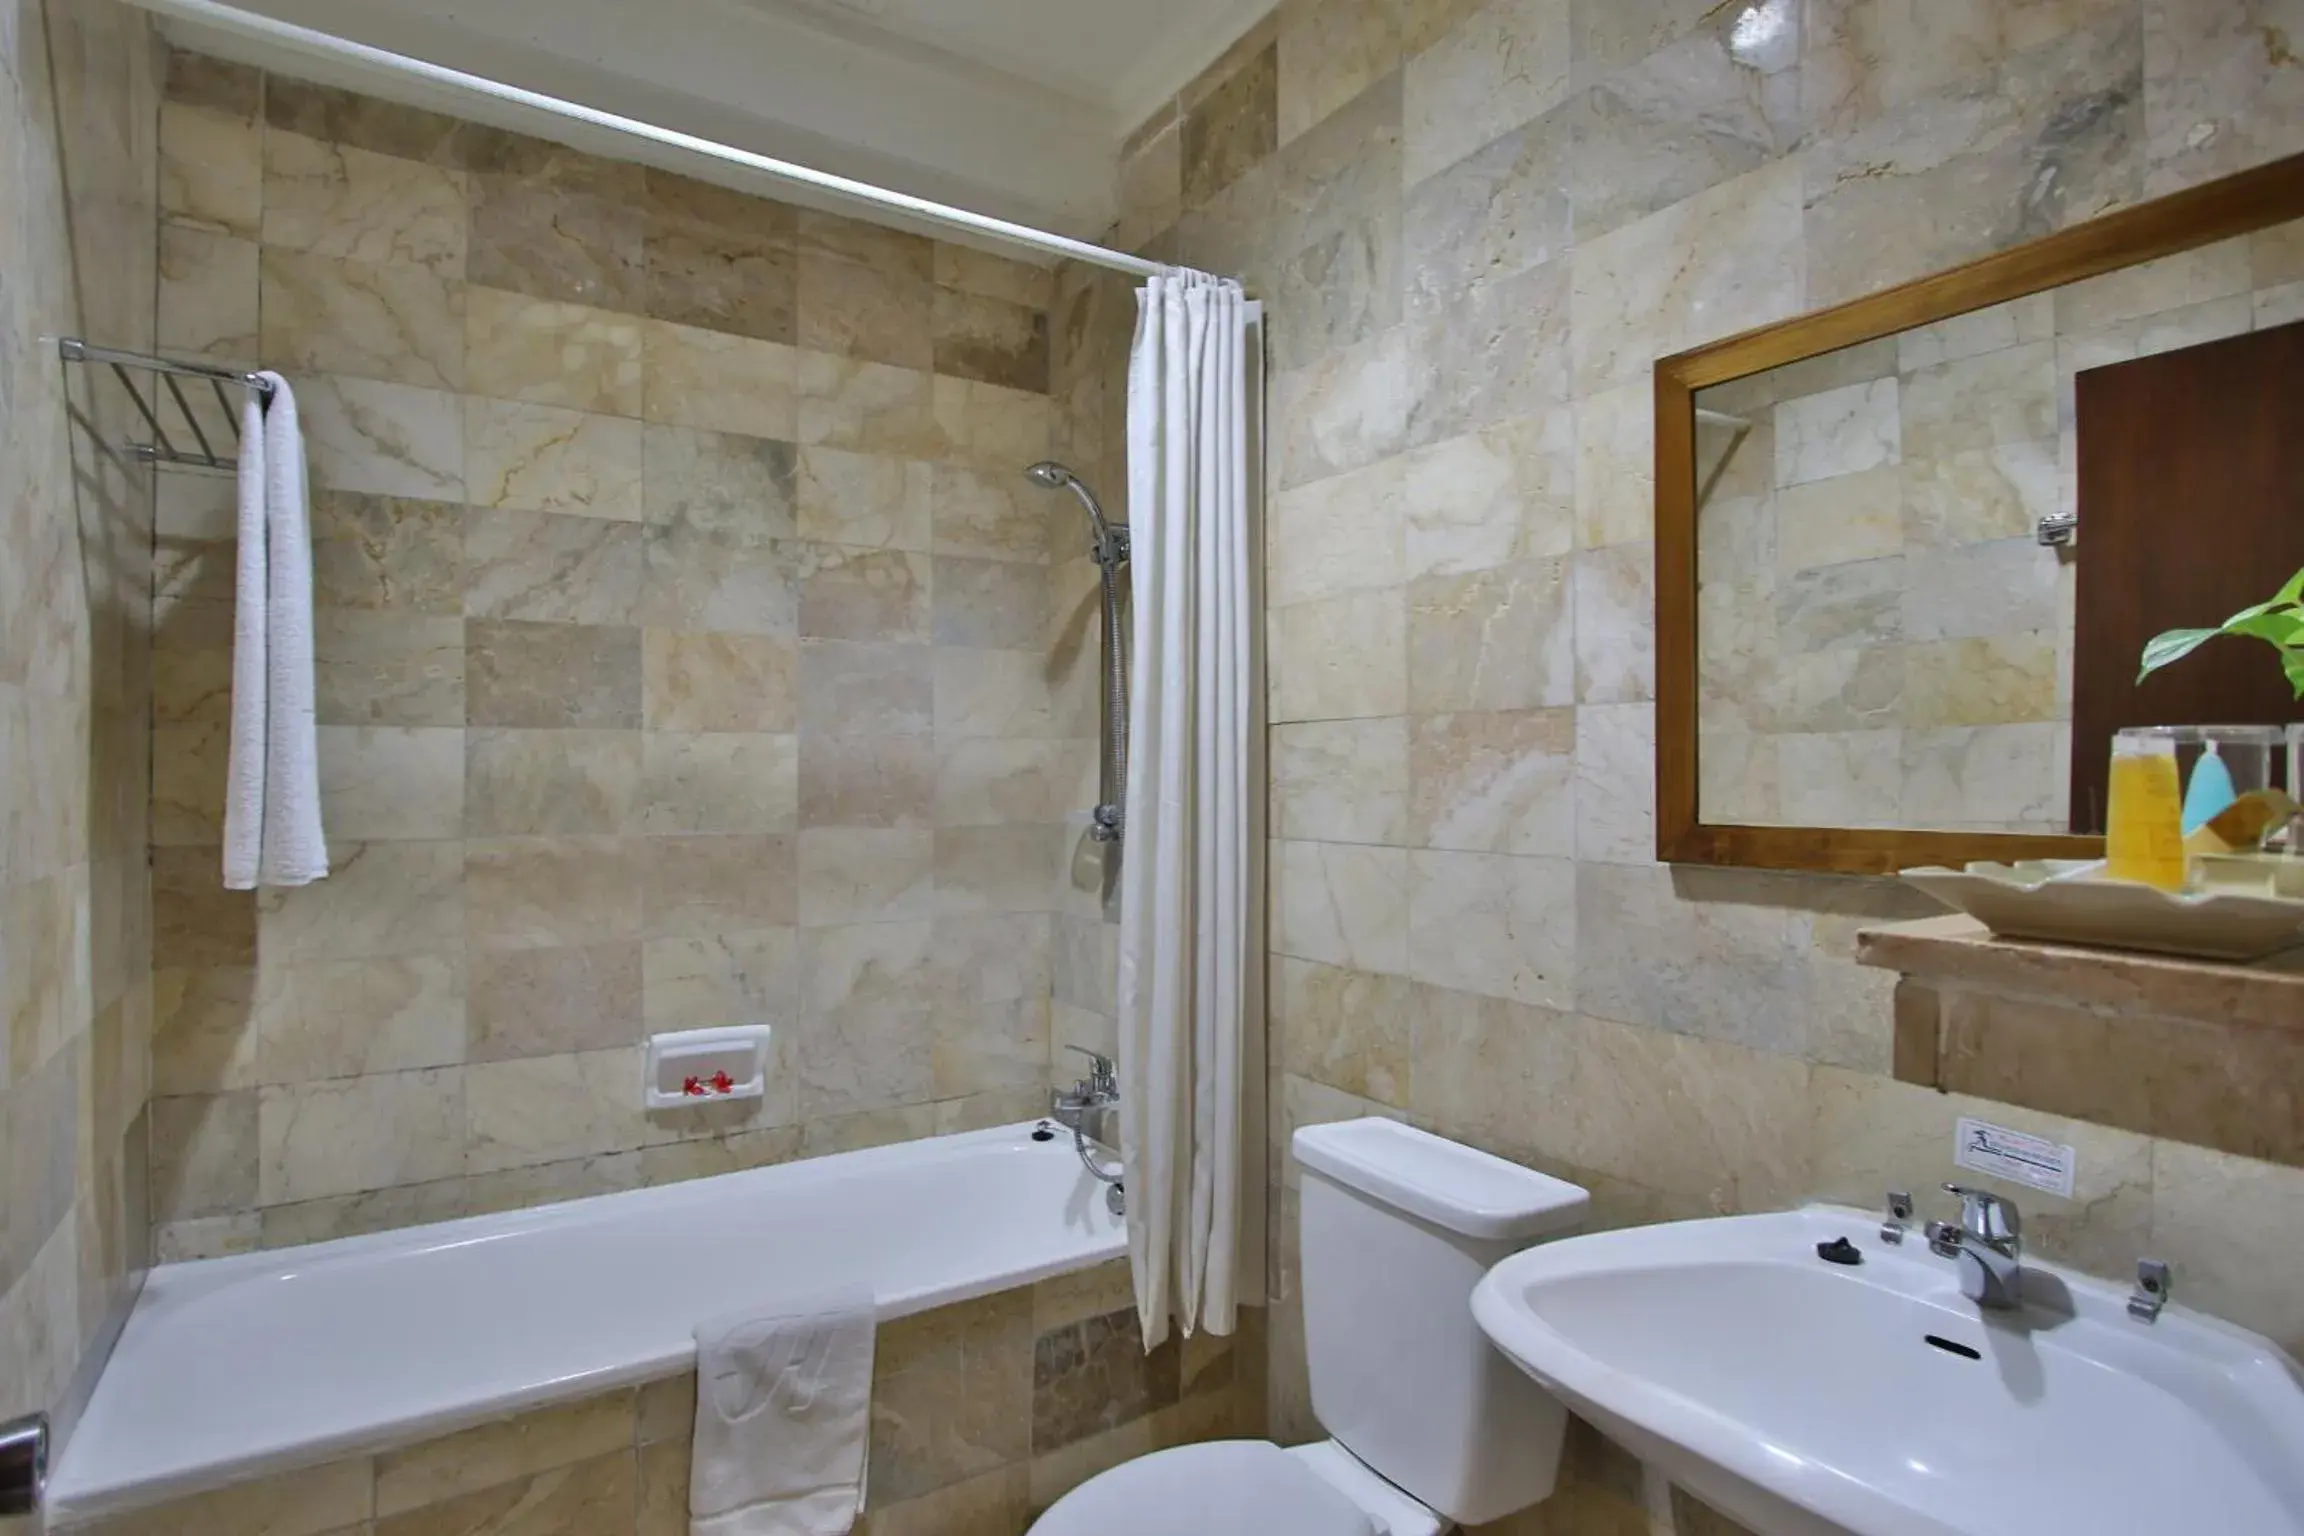 Shower, Bathroom in Jayakarta Hotel Bali